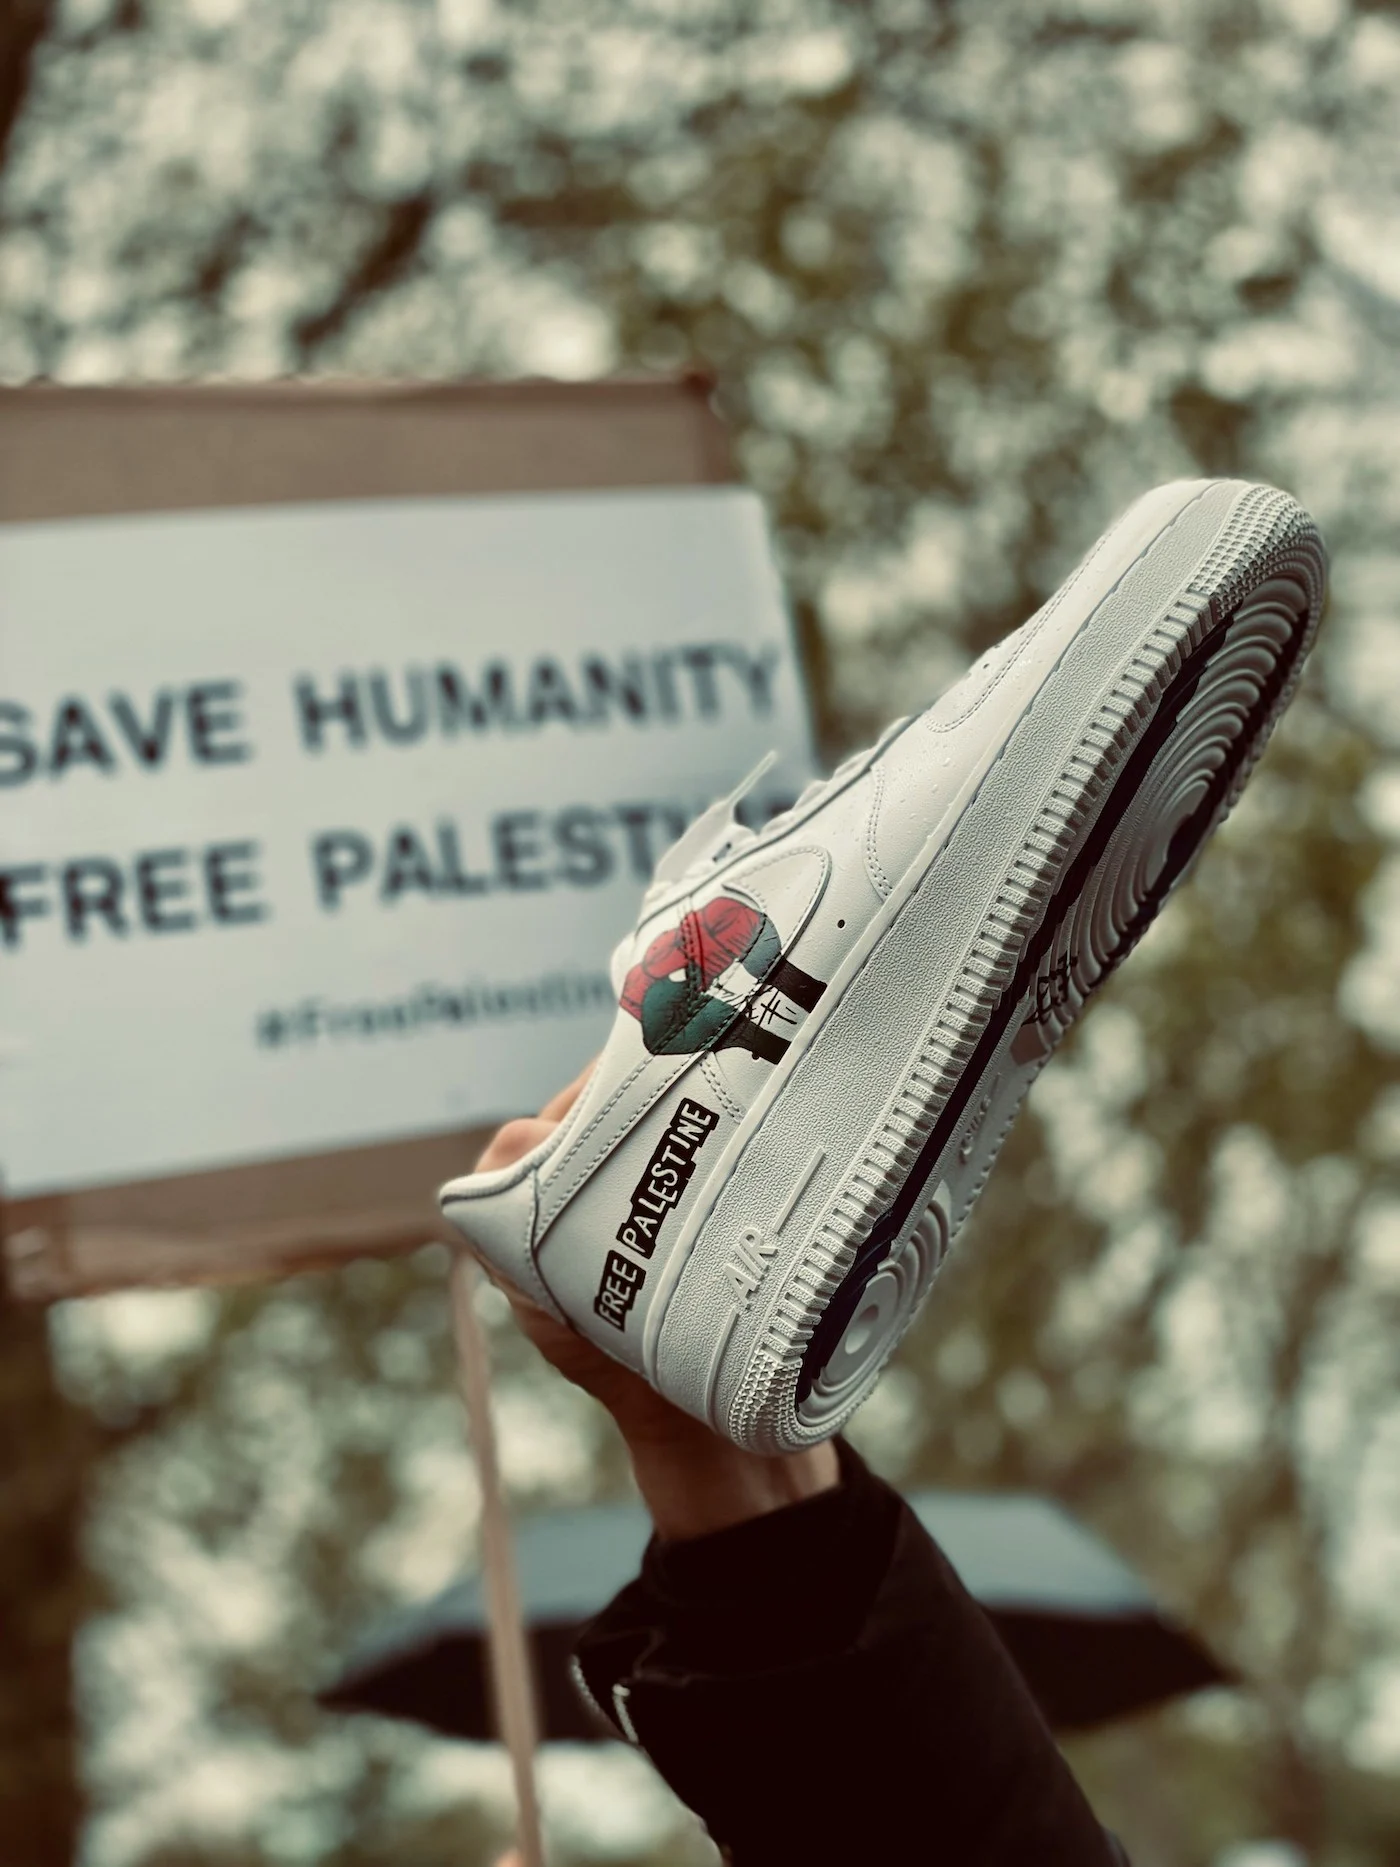 free palestine brands to boycott